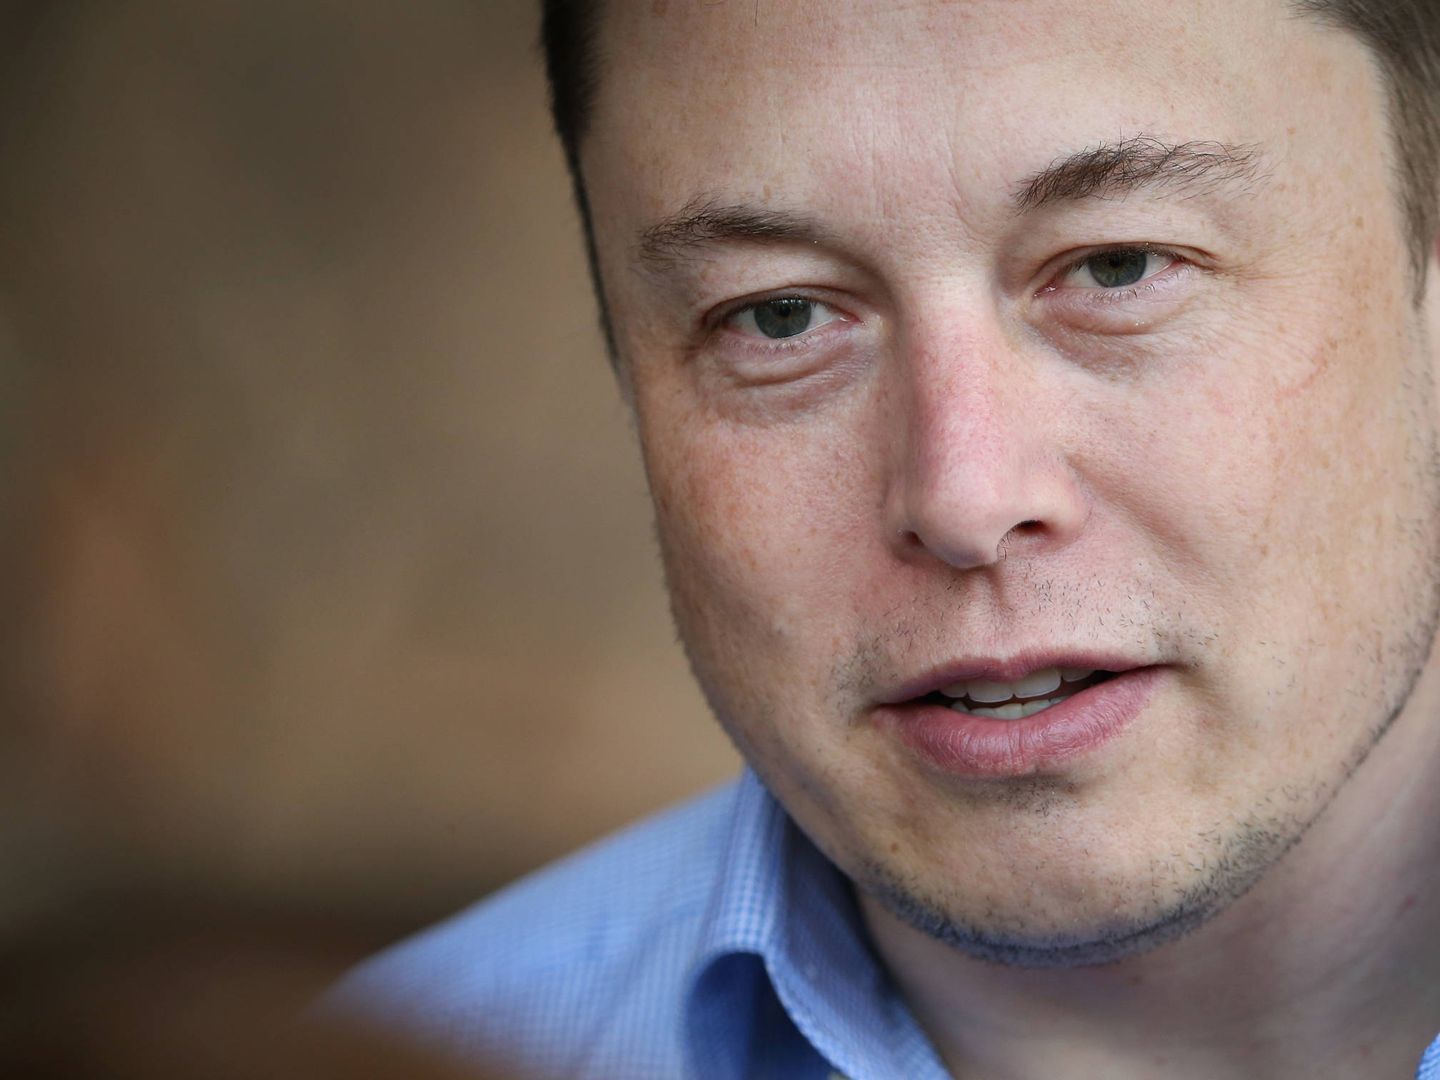  Elon Musk. (Getty)